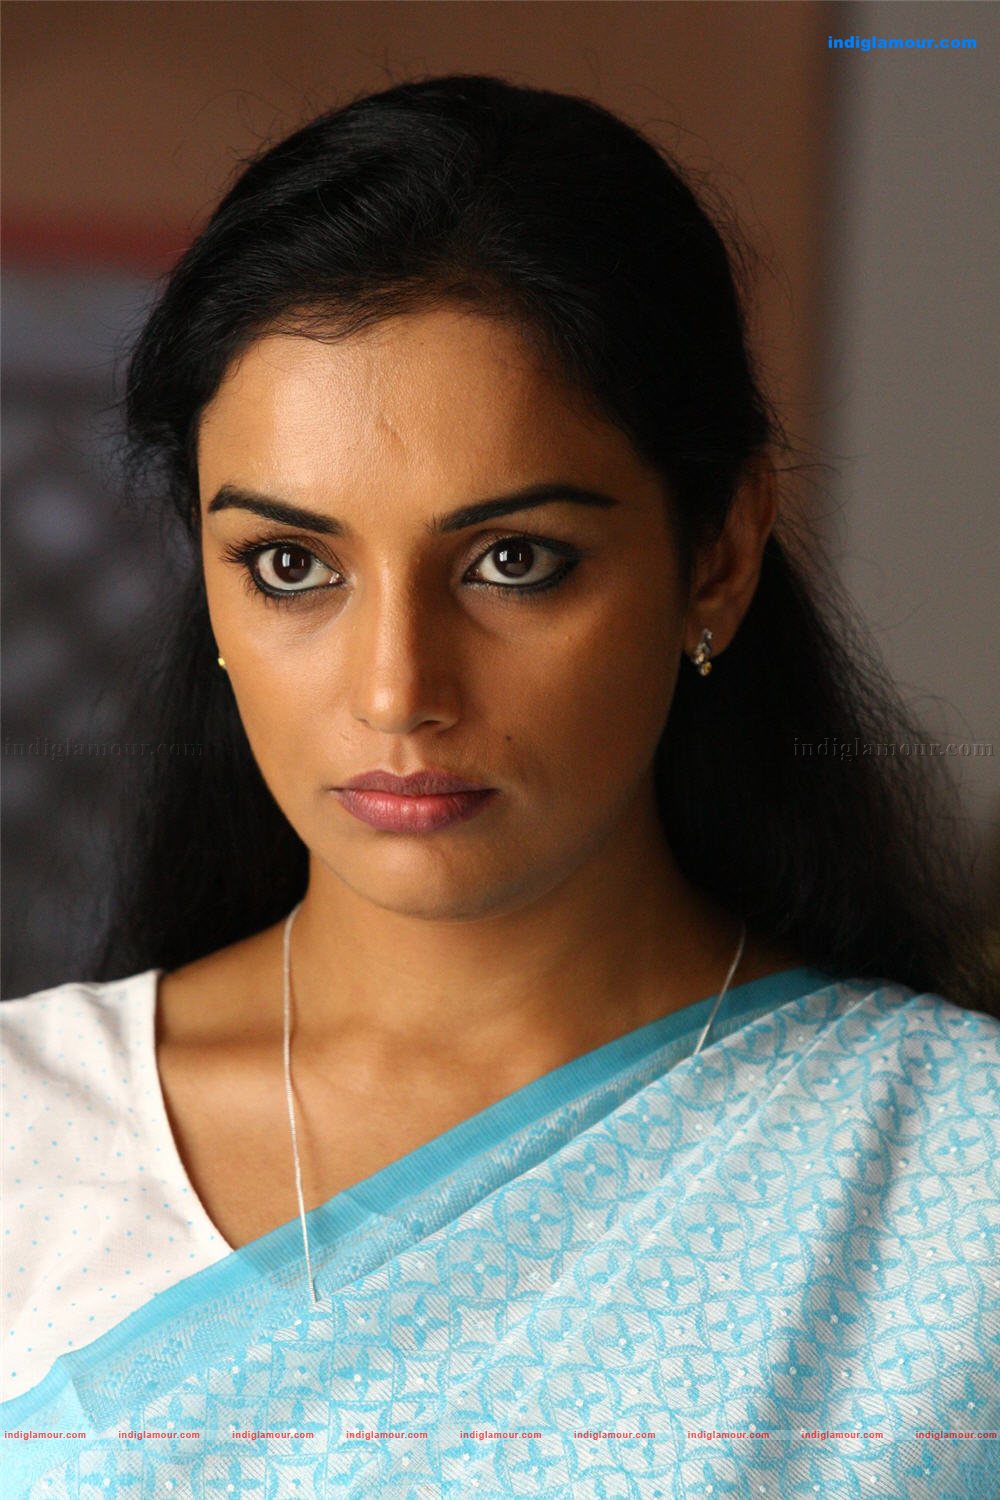 http://i.indiglamour.com/photogallery/malayalam/actress/2011/feb15/Swetha-Menon/normal/Swetha-Menon_22489.jpg